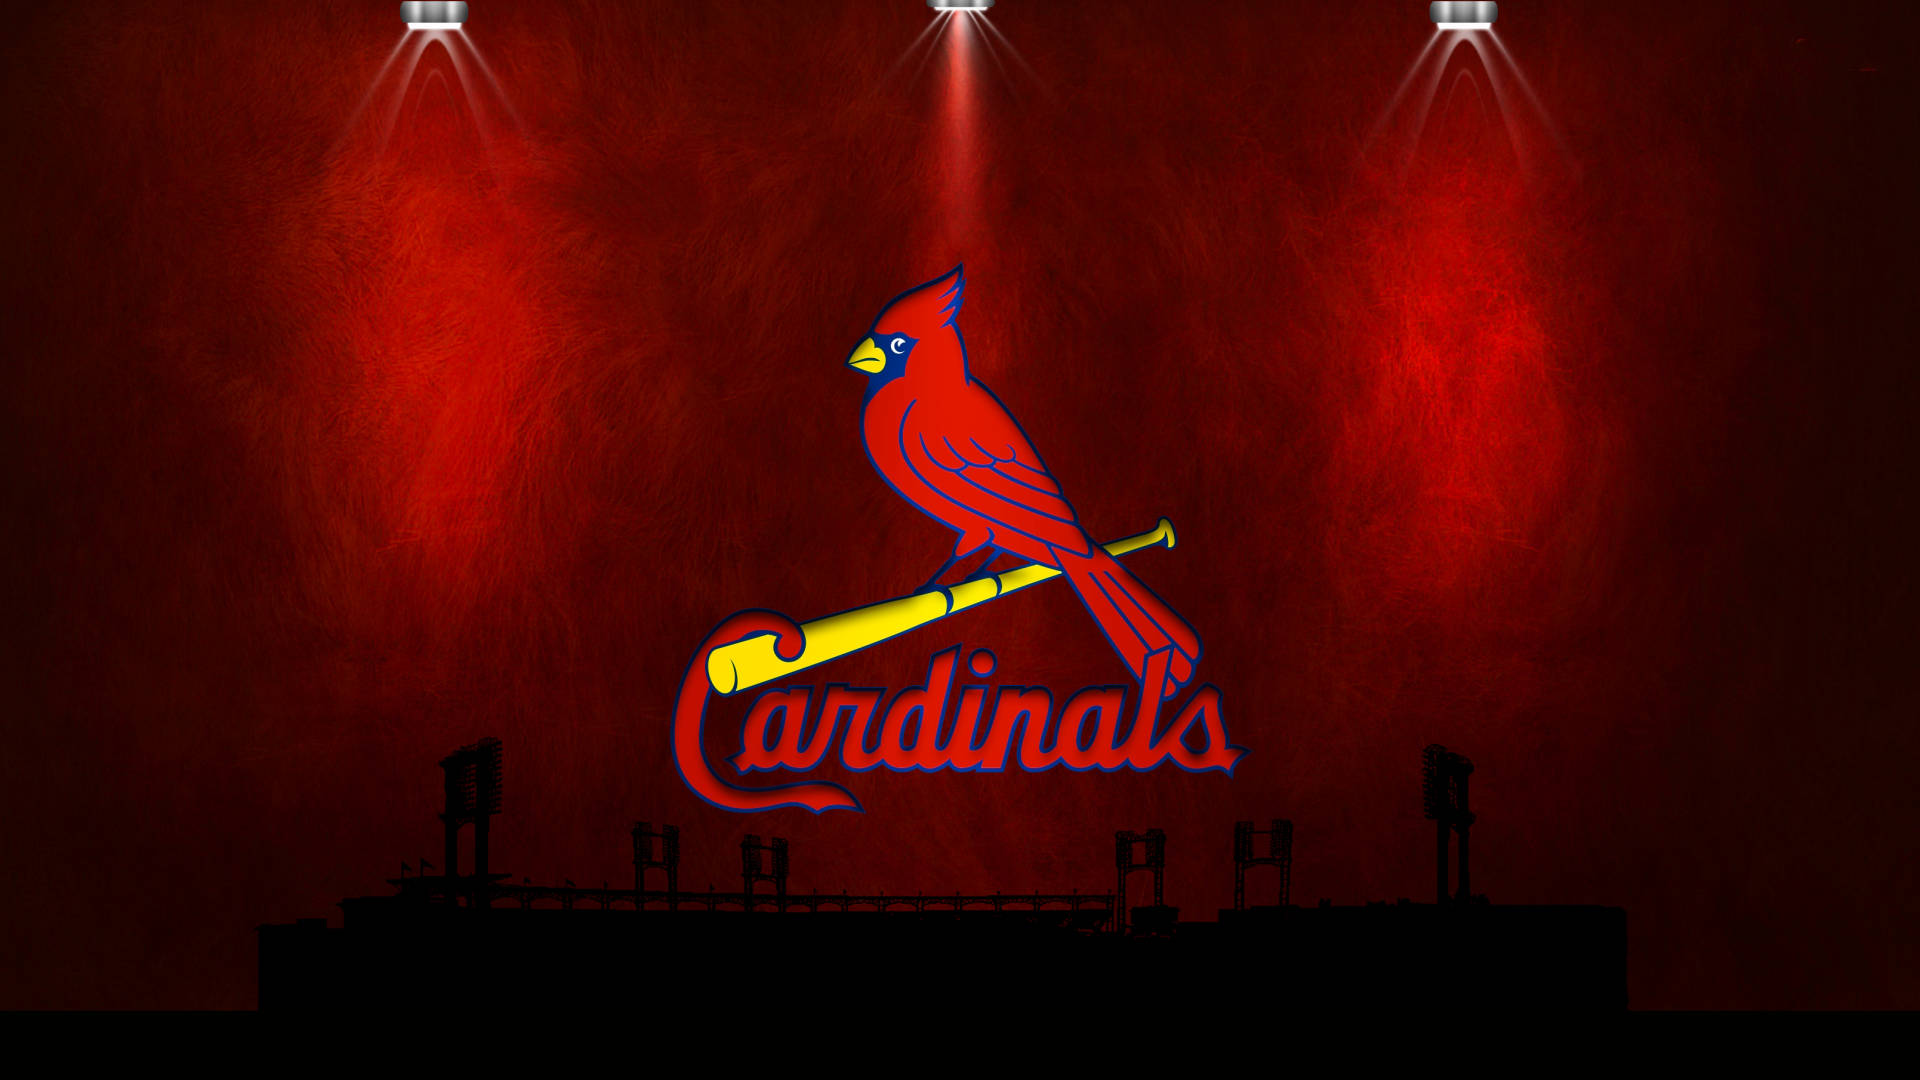 Intense Spotlight On The St.louis Cardinals Mascot